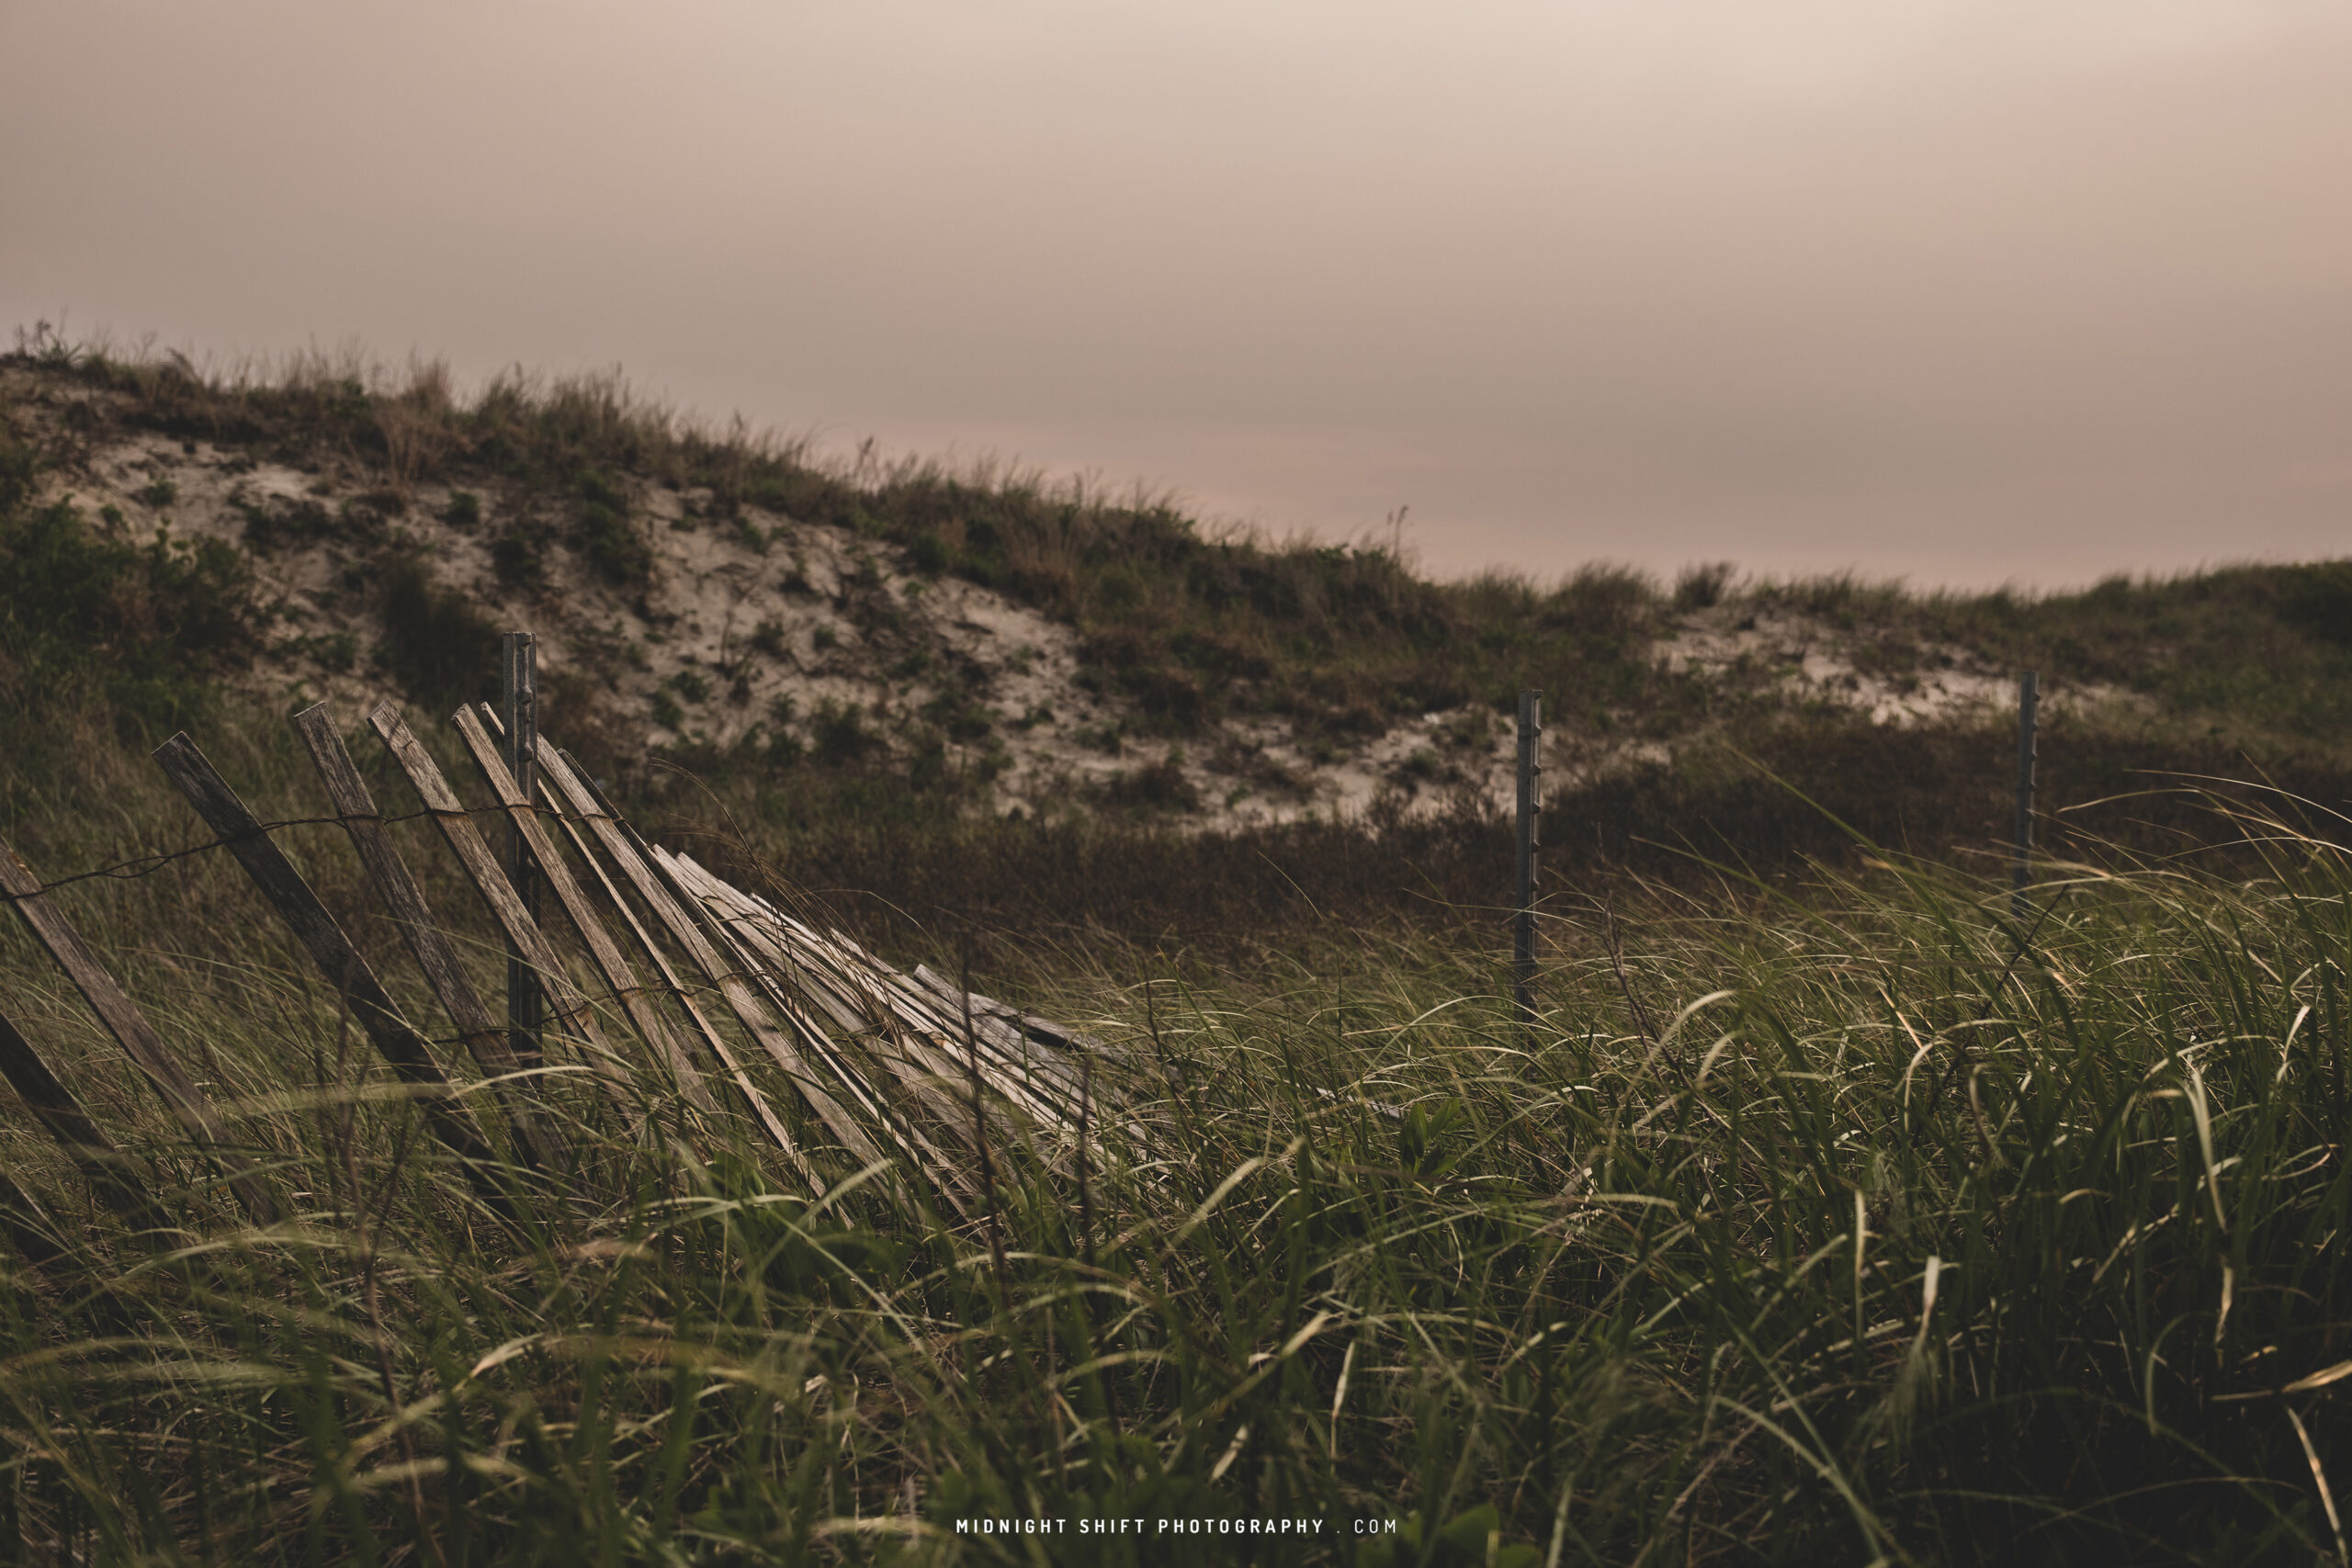 A partially fallen beach fence in some sand dunes at Horseneck Beach in Westport, Massachusetts